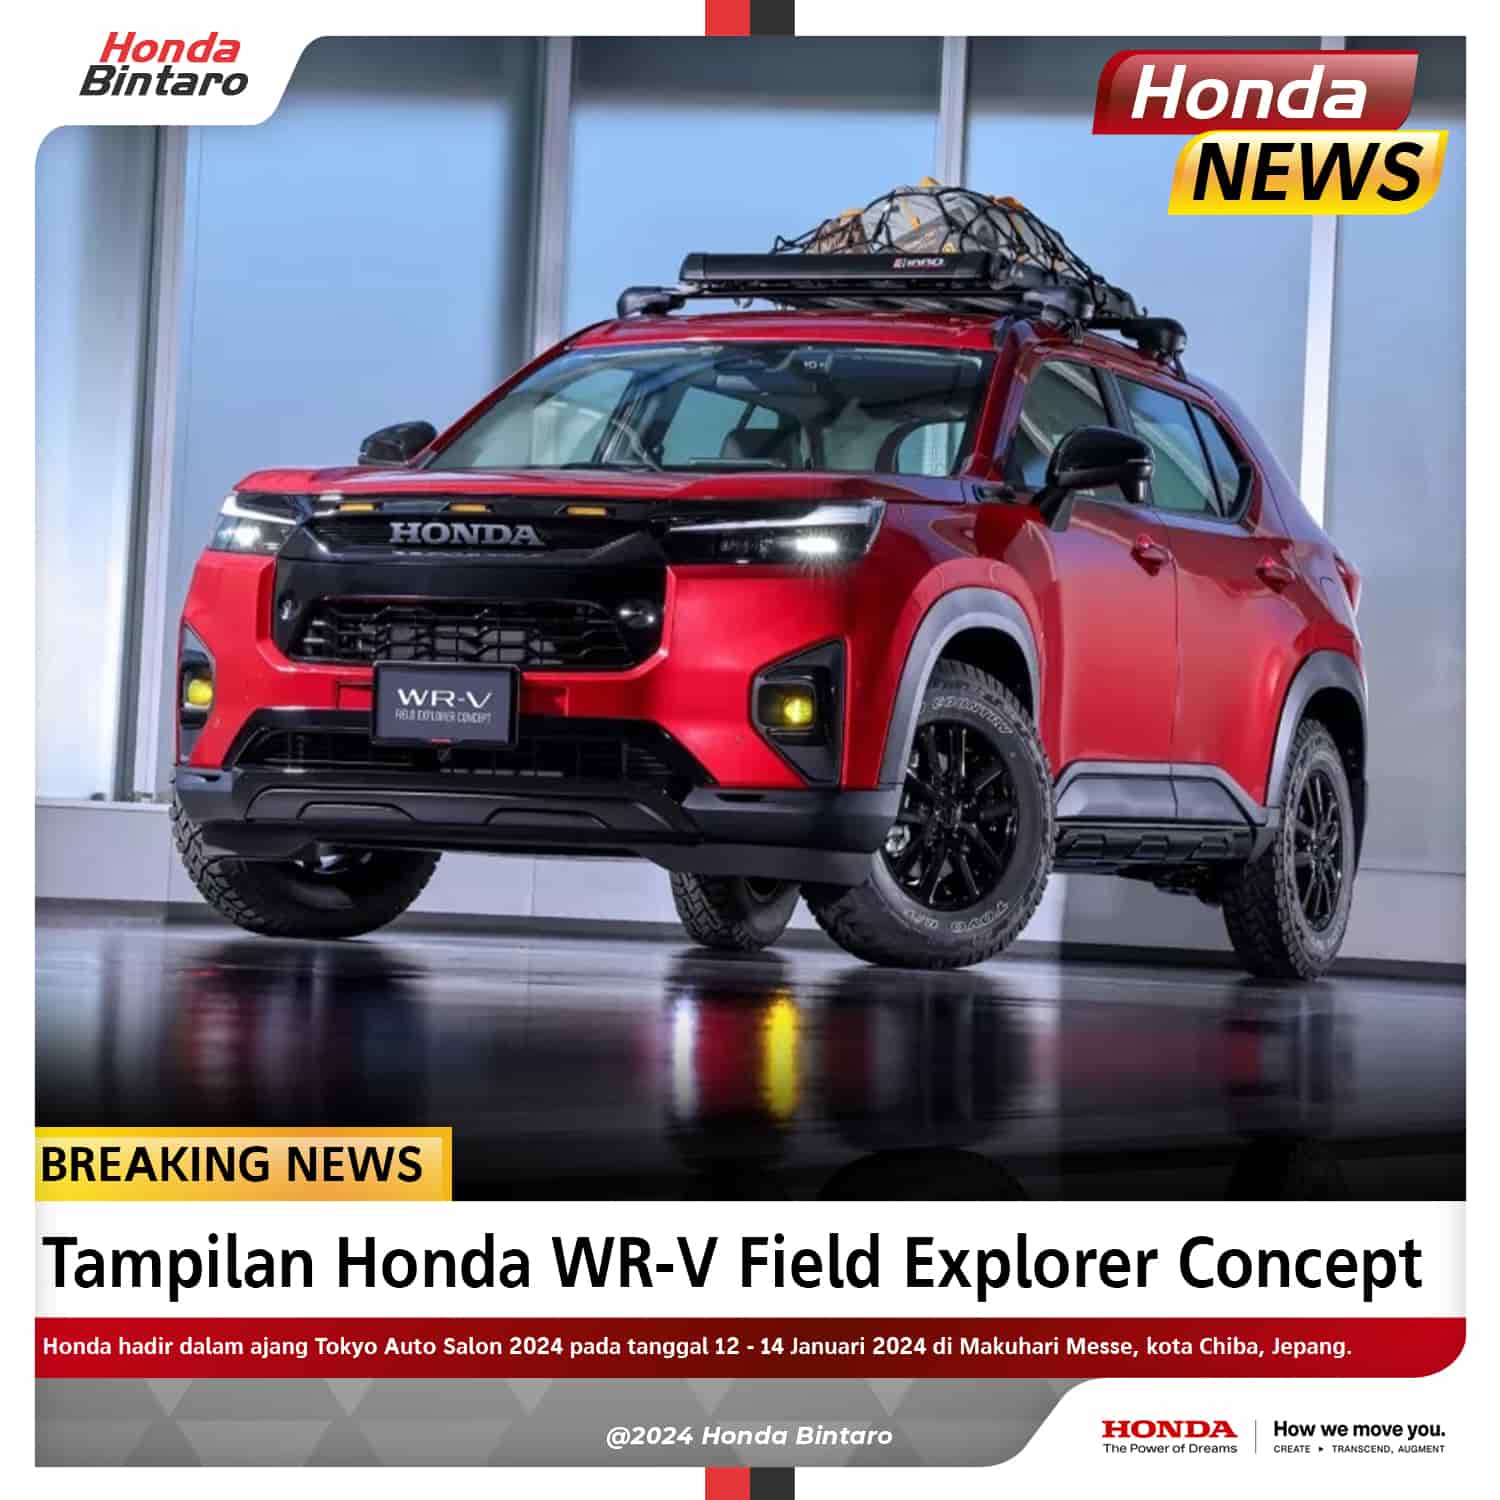 Tampilan Honda WR-V Field Explorer Concept